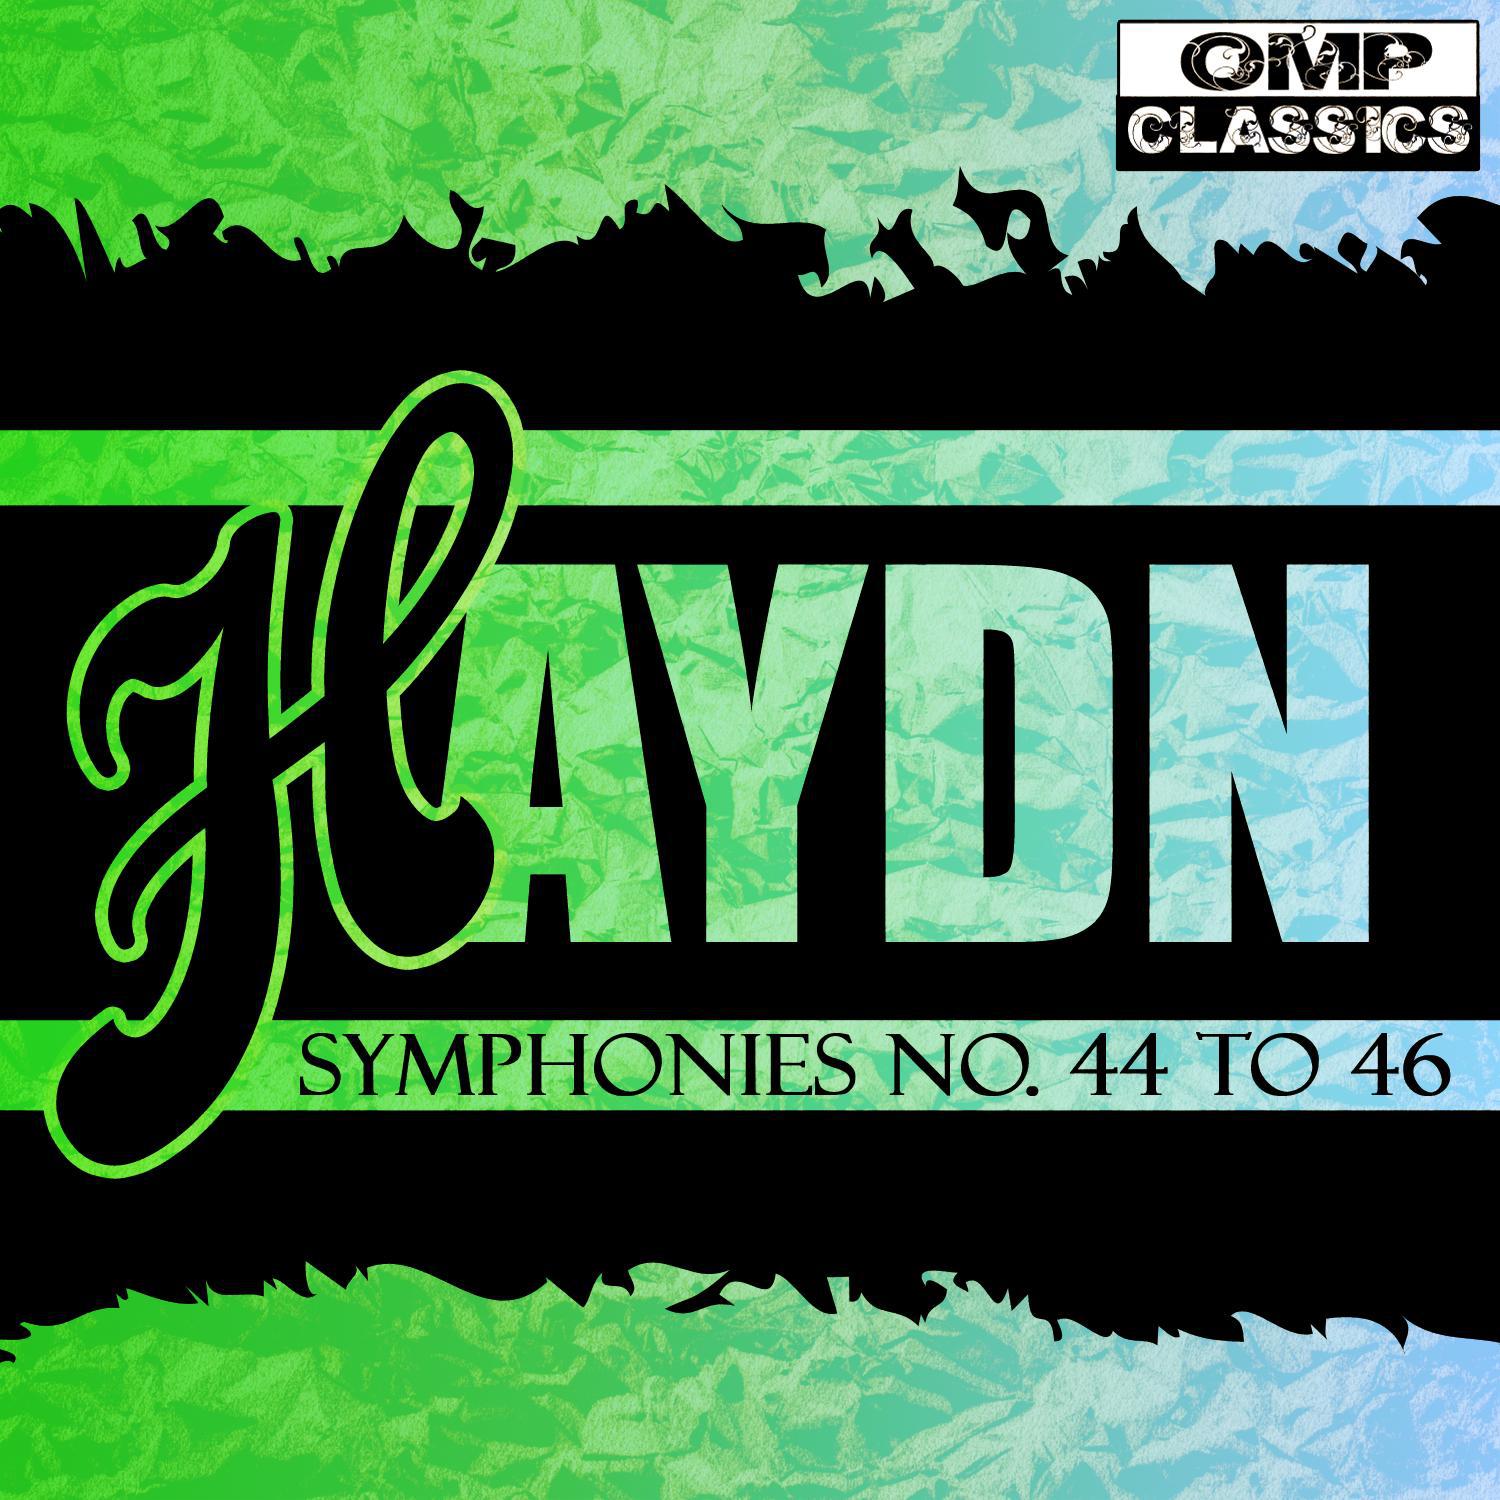 Haydn: Symphonies No. 44 to 46